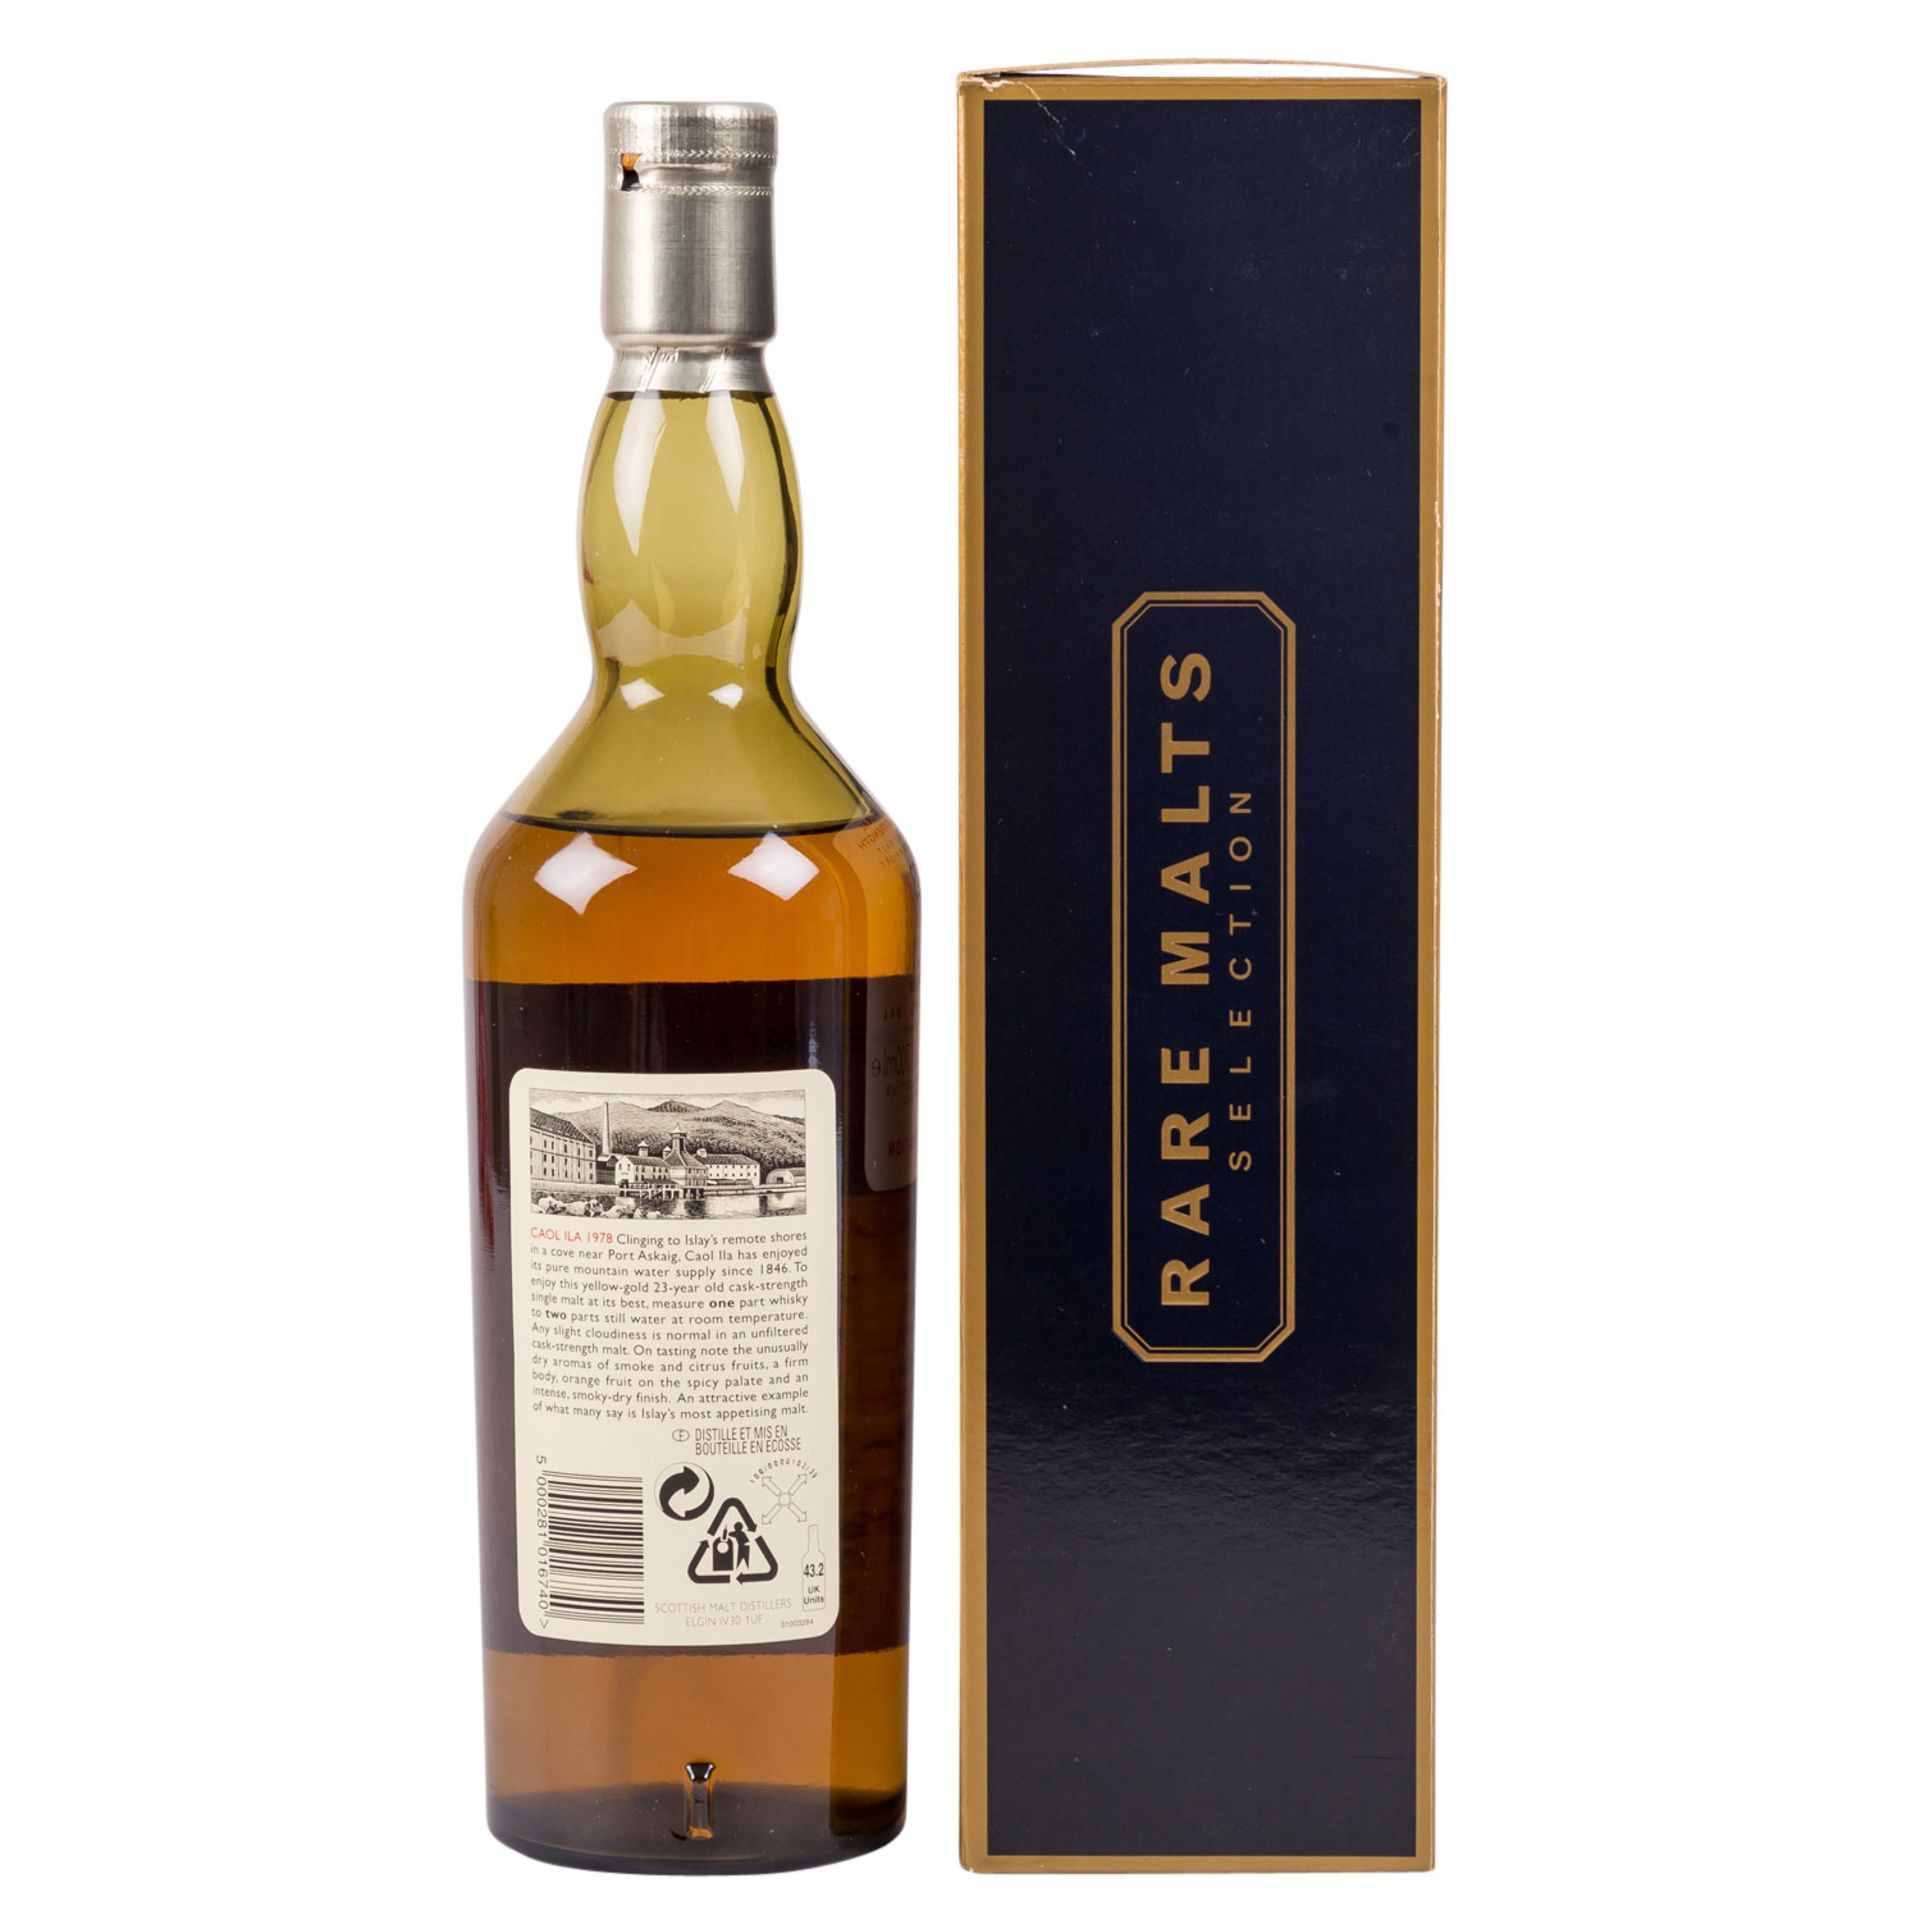 CAOL ILA Single Malt Scotch Whisky, 23 years - Image 2 of 3